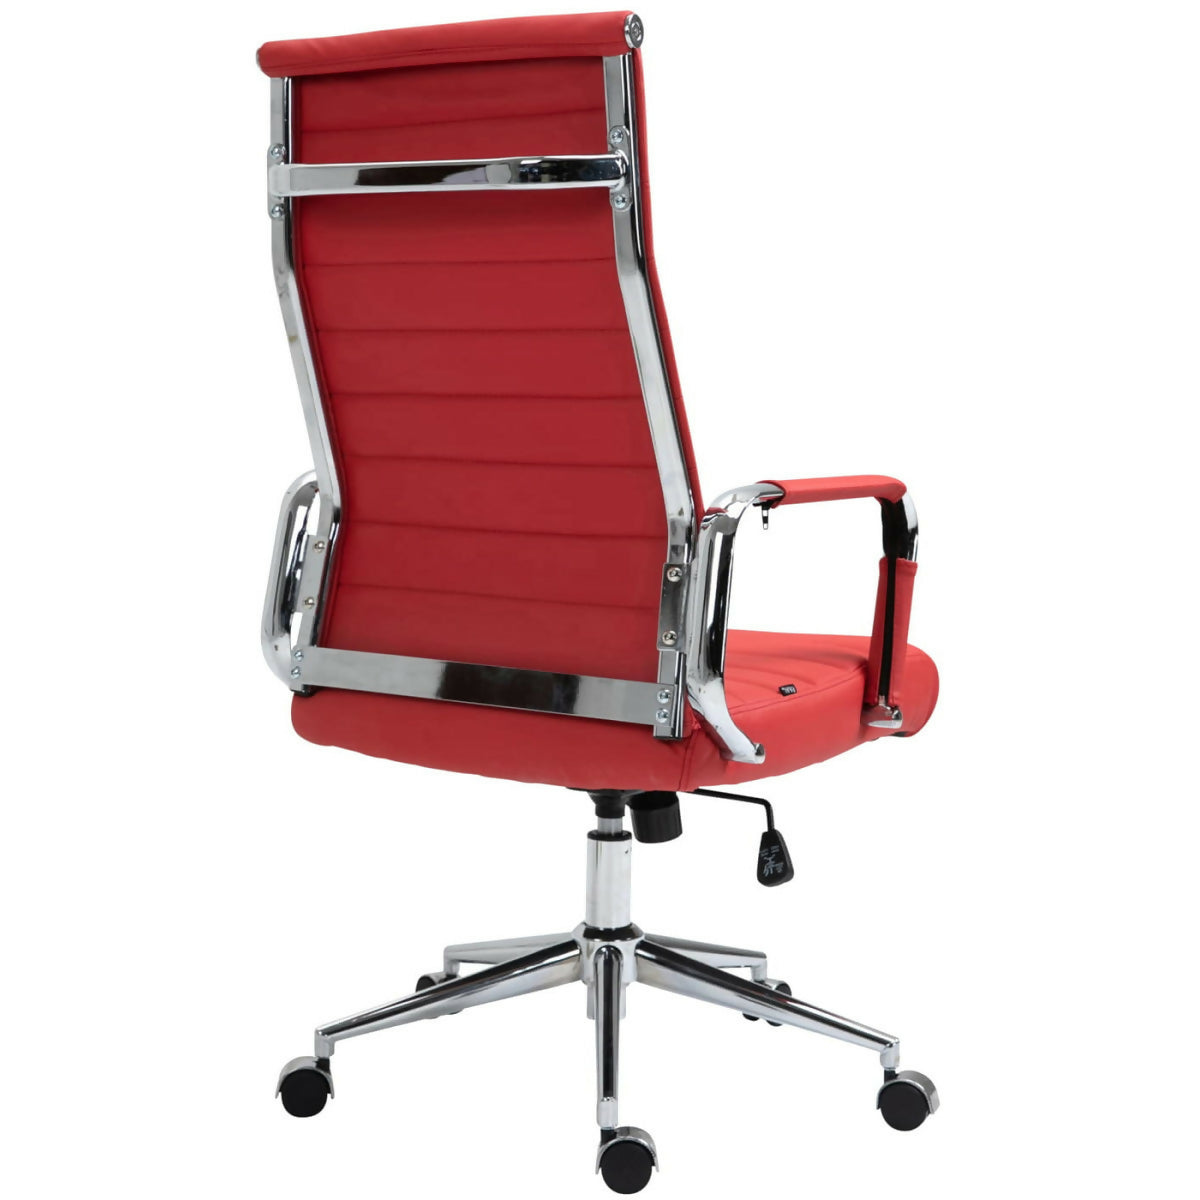 Kolumbus office chair - Red